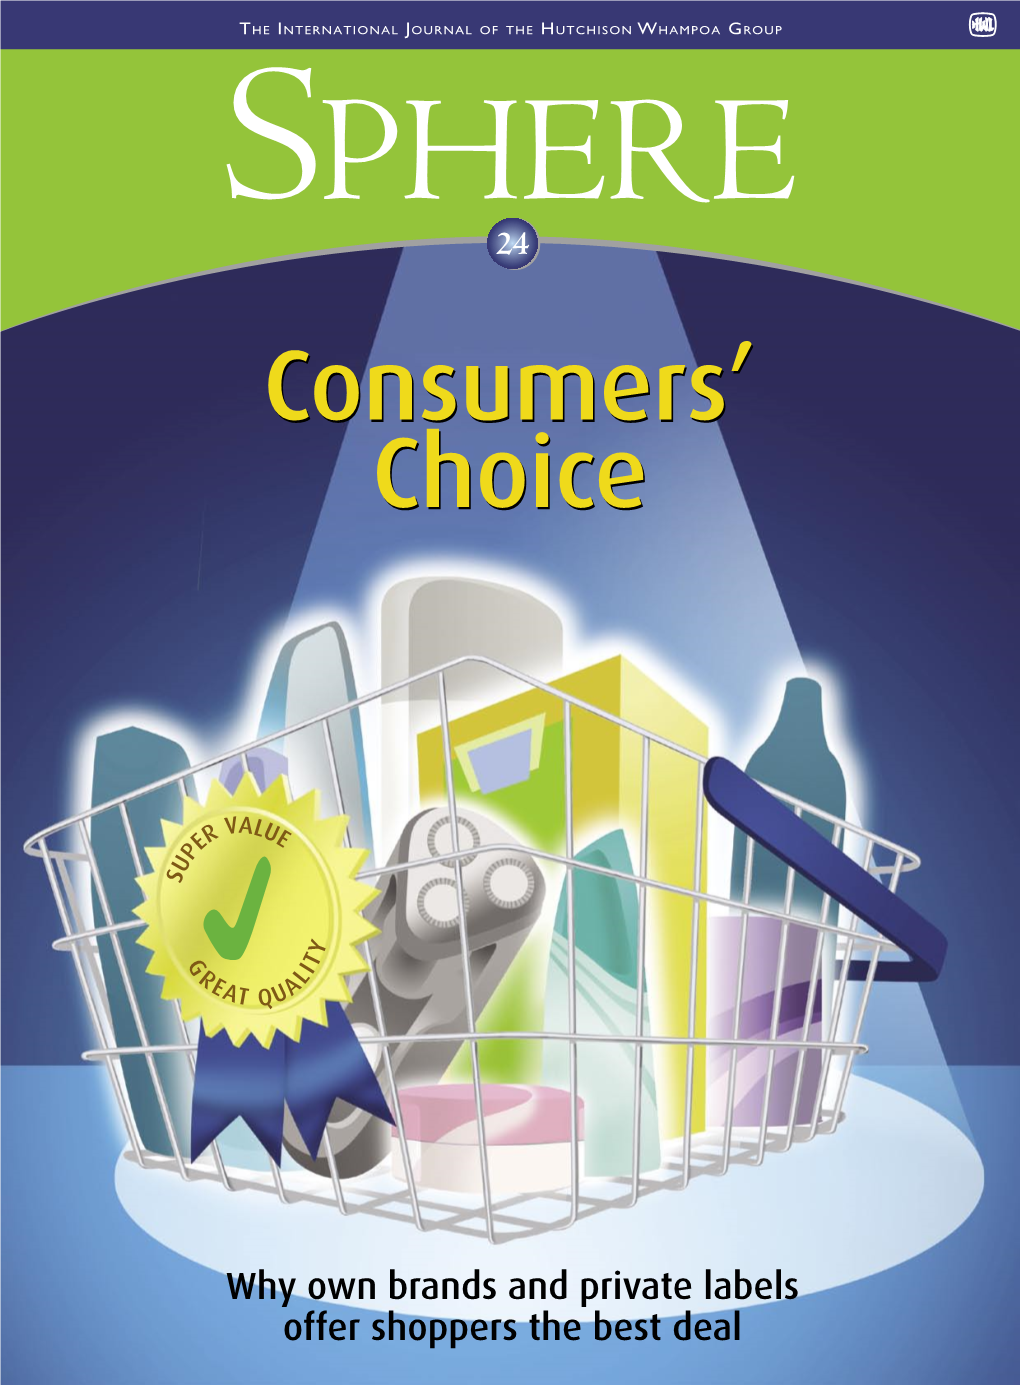 Consumers' Choice